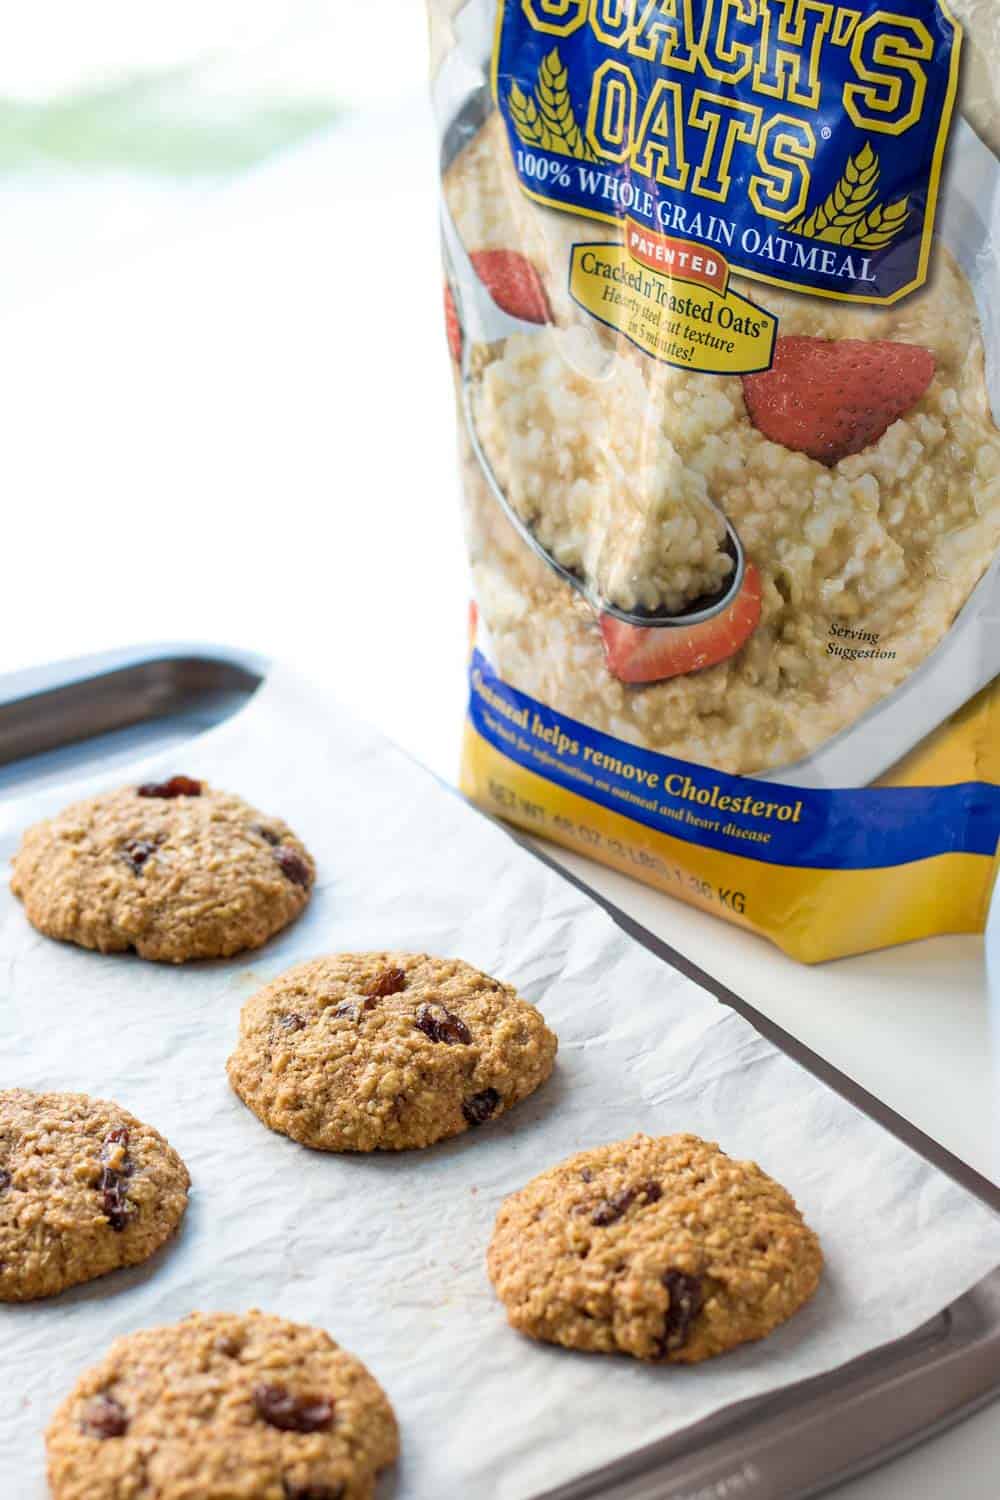 Are oatmeal raisin cookies healthy?